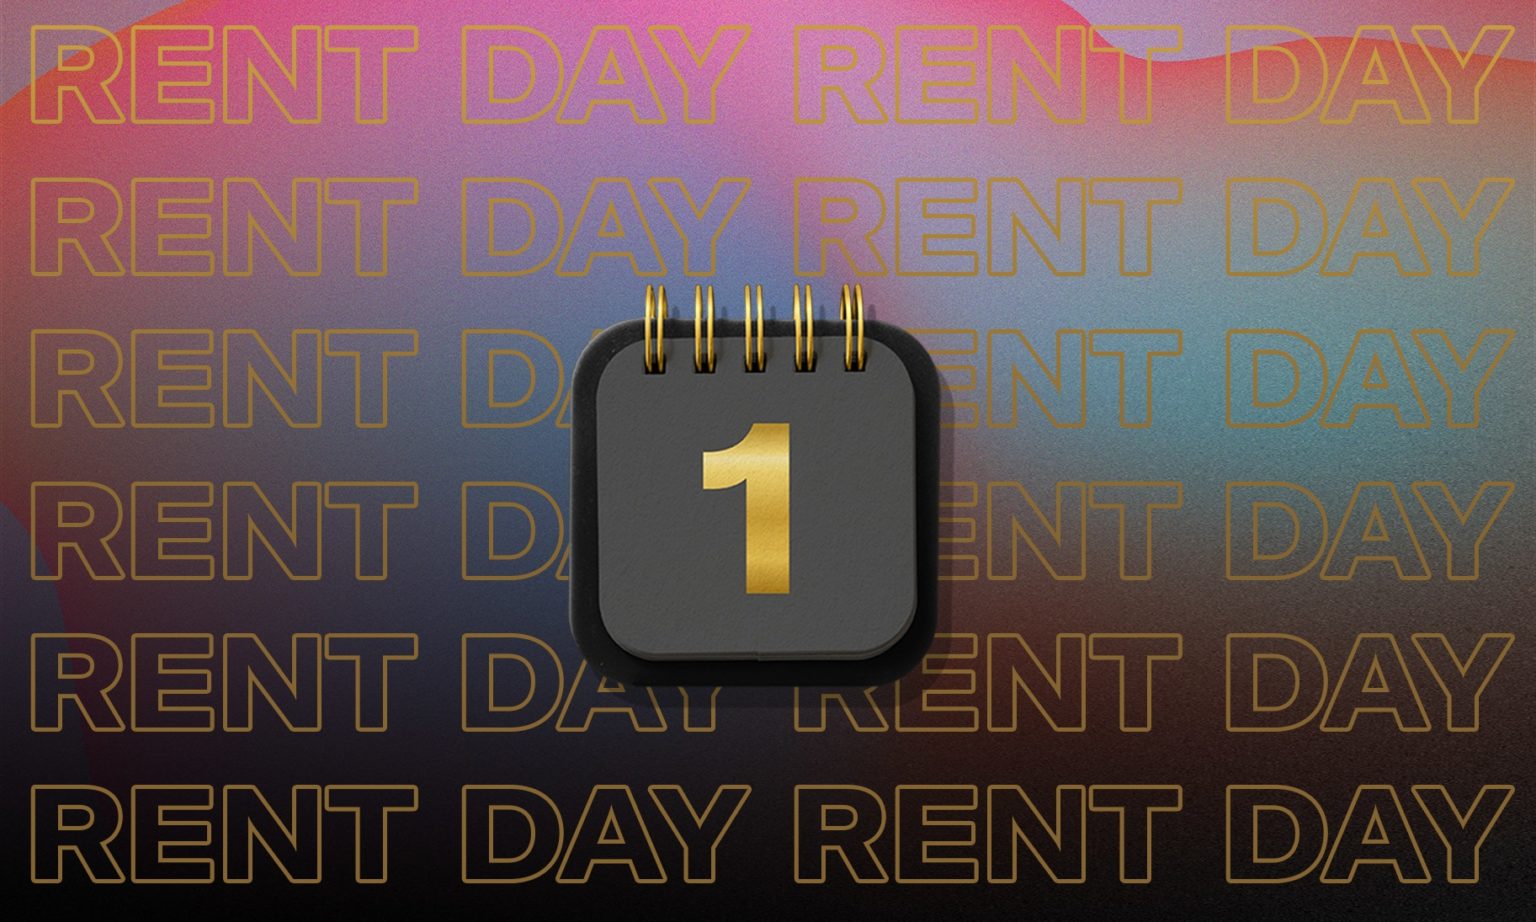 Bilt Rent Day Promos for January 2023 LaptrinhX / News